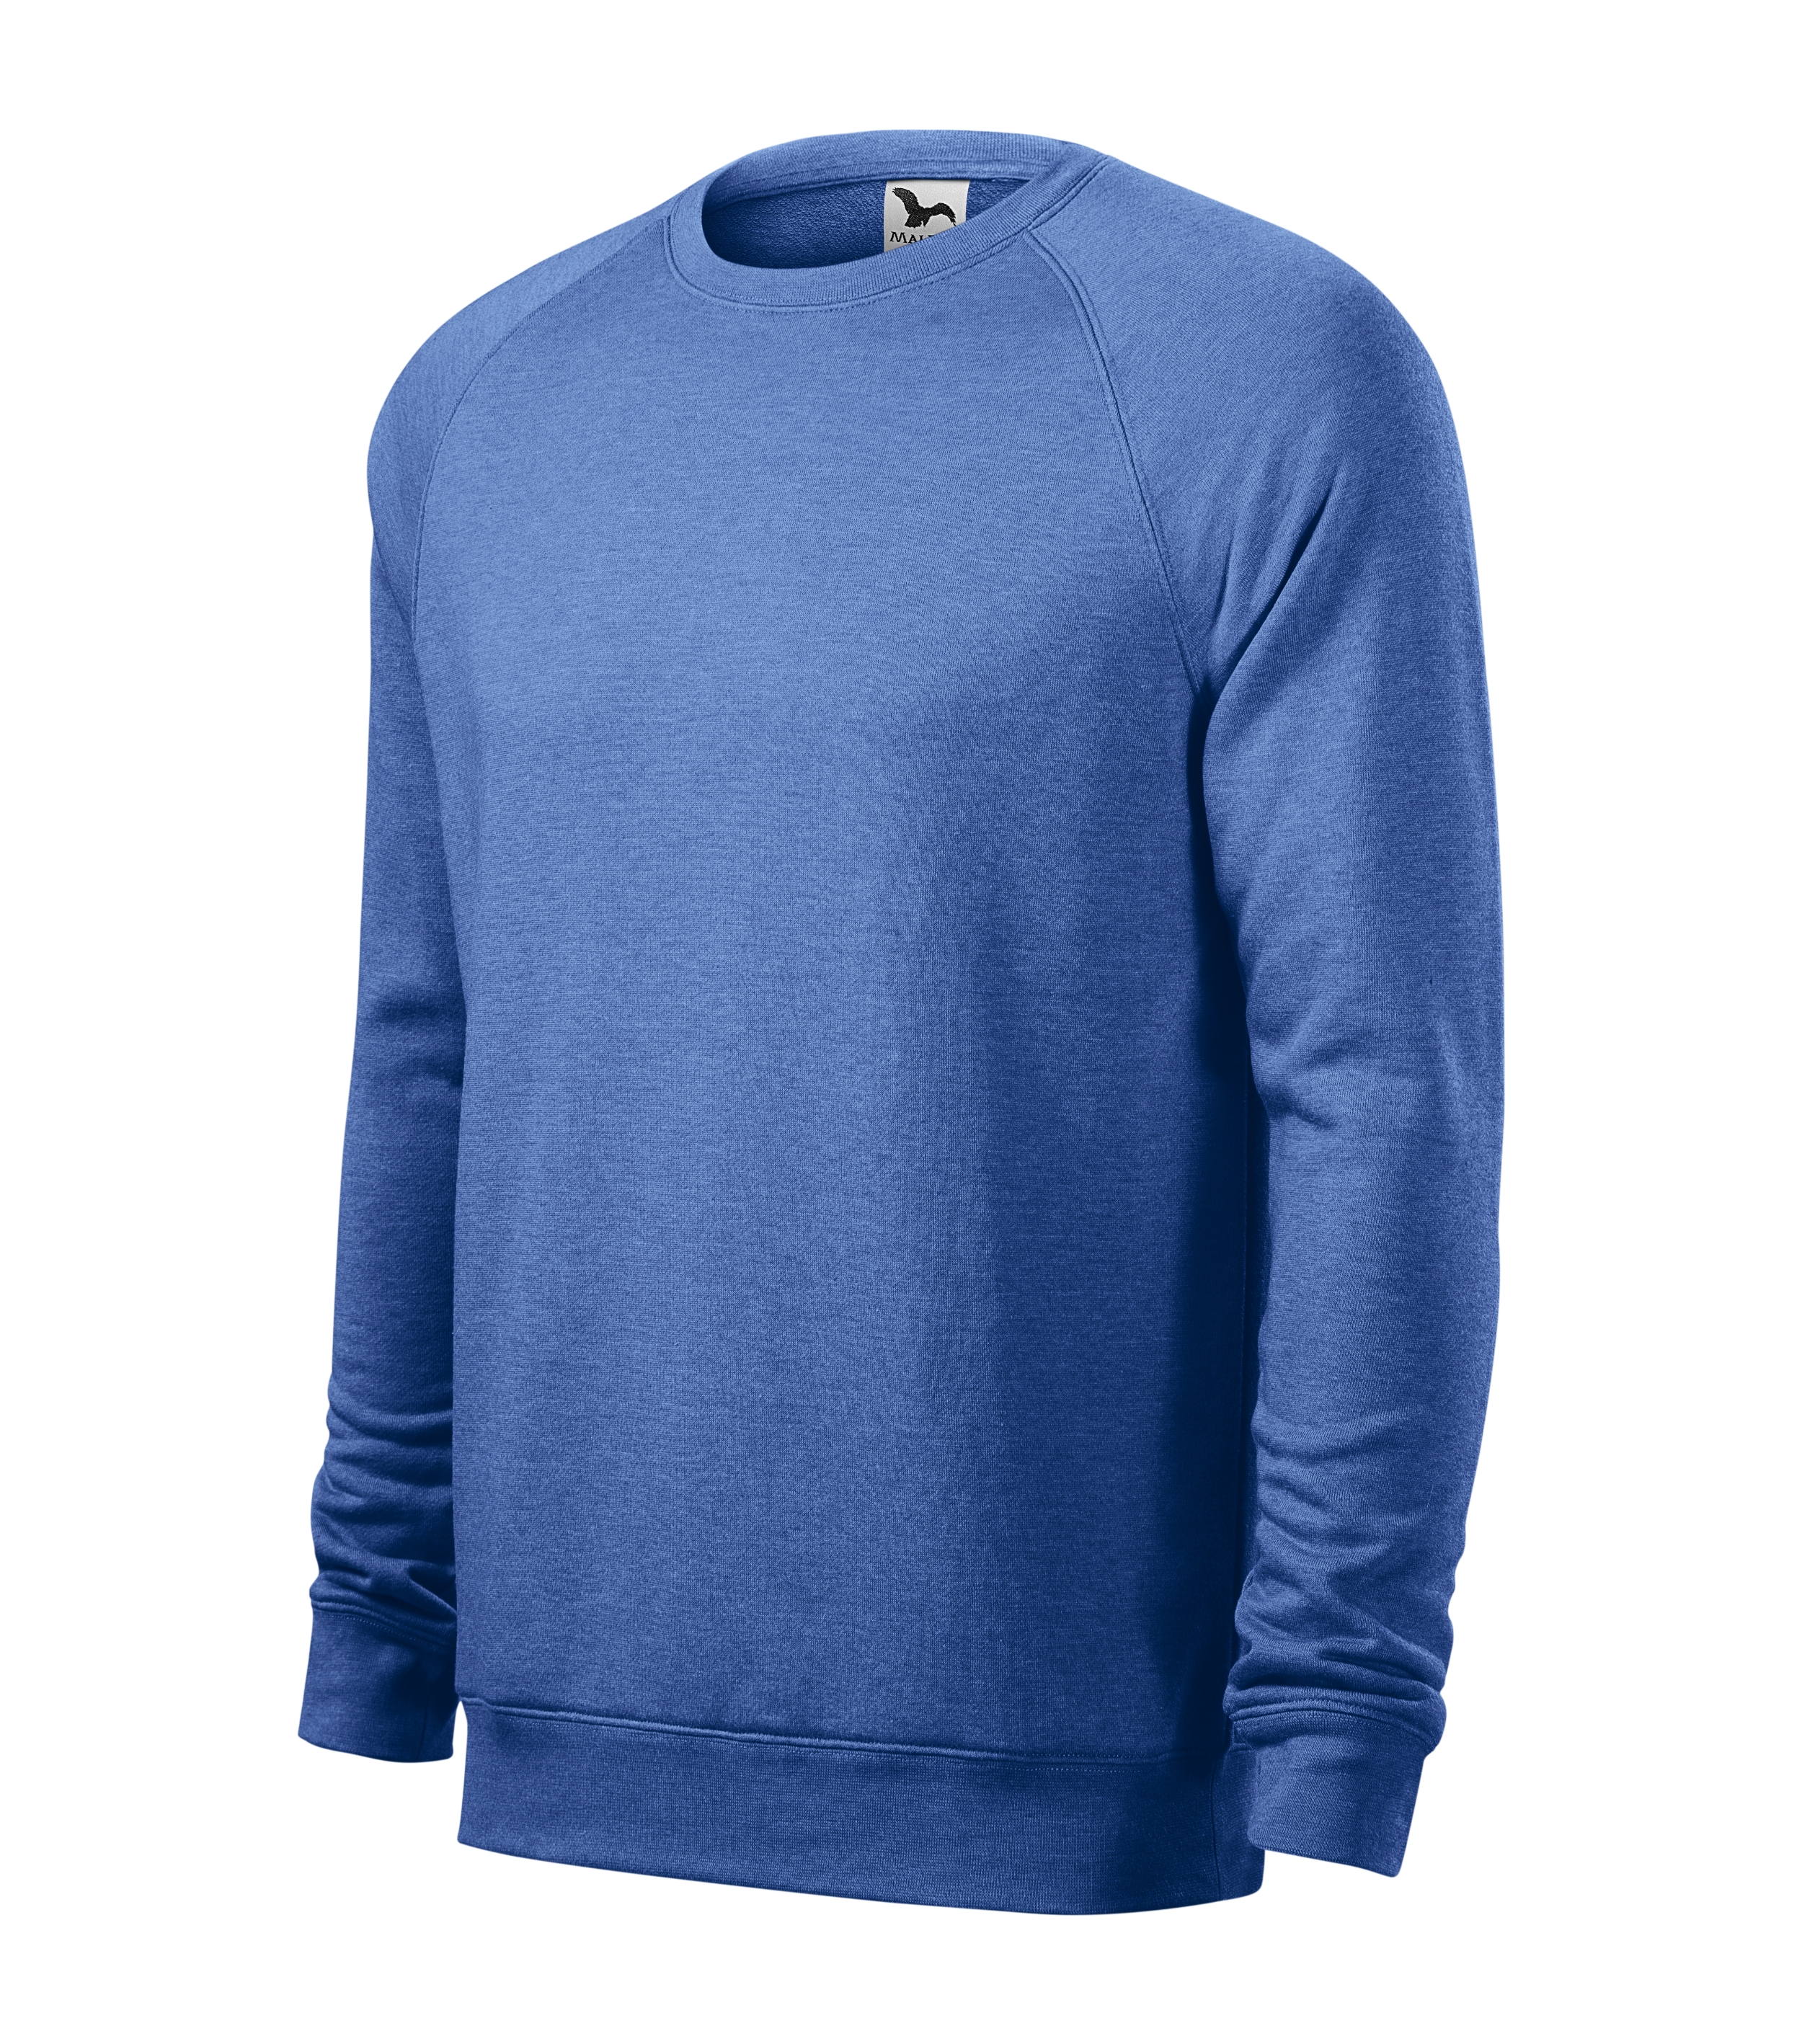 Merger 415 Sweatshirt Herren Pulli Pullover Sweater Sweatshirts Arbeitspullover